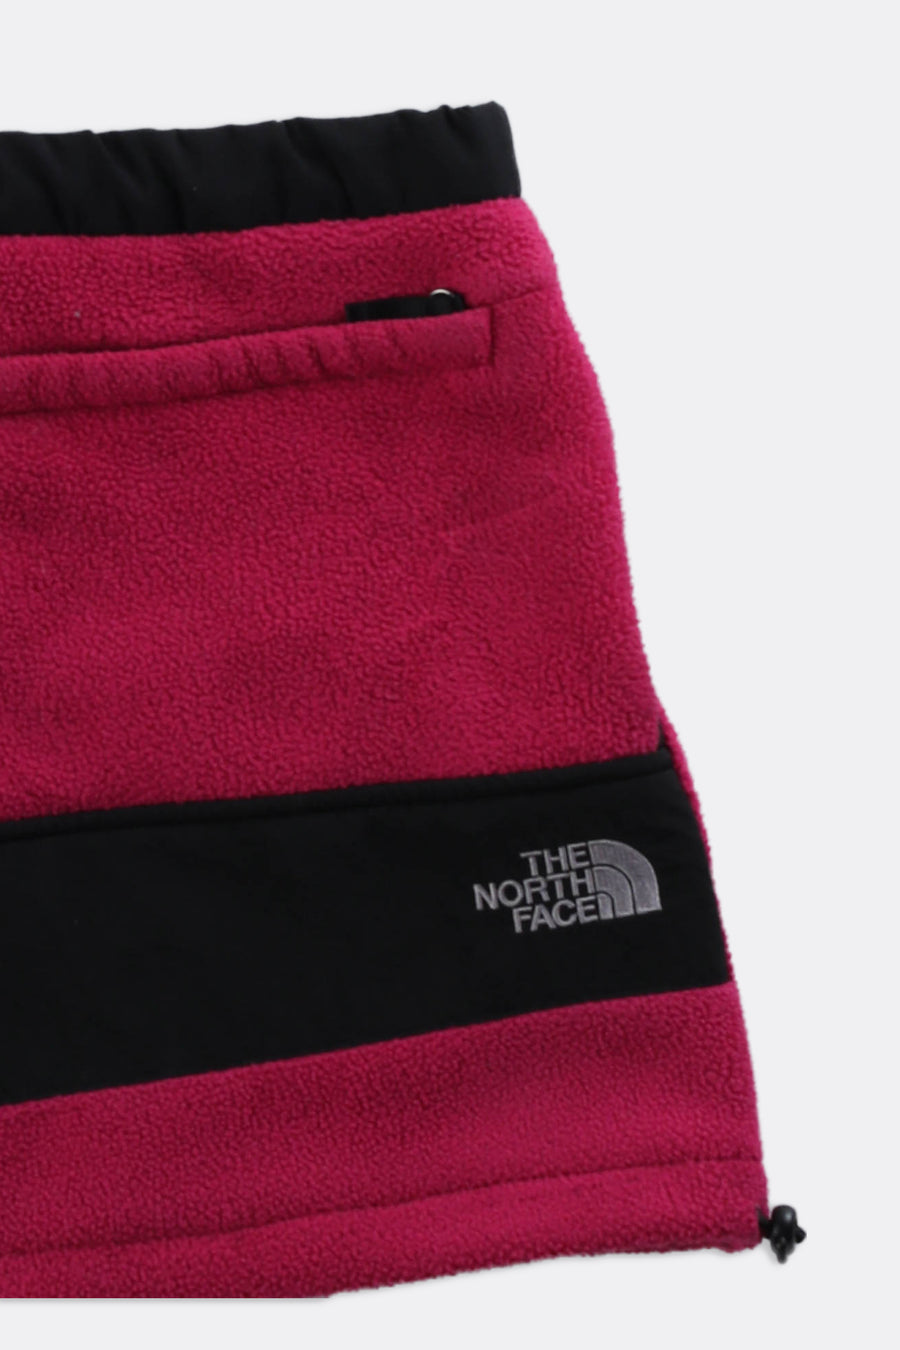 Rework North Face Fleece Mini Skirt - S